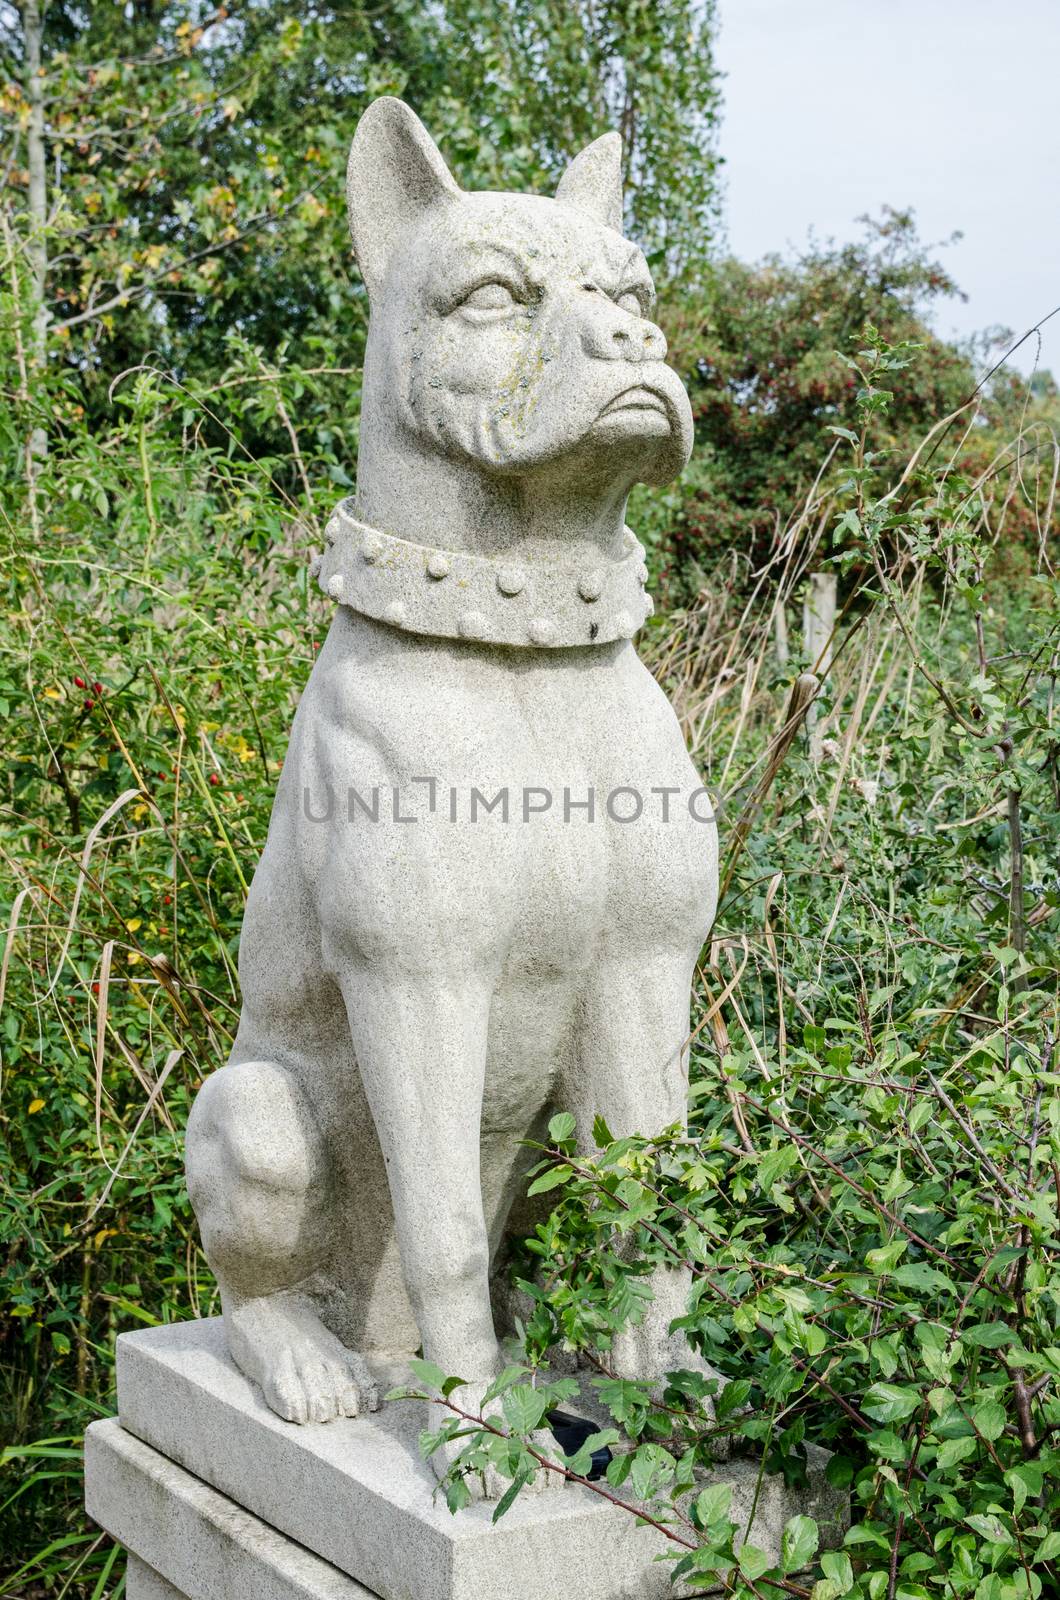 Guard Dog Statue by BasPhoto